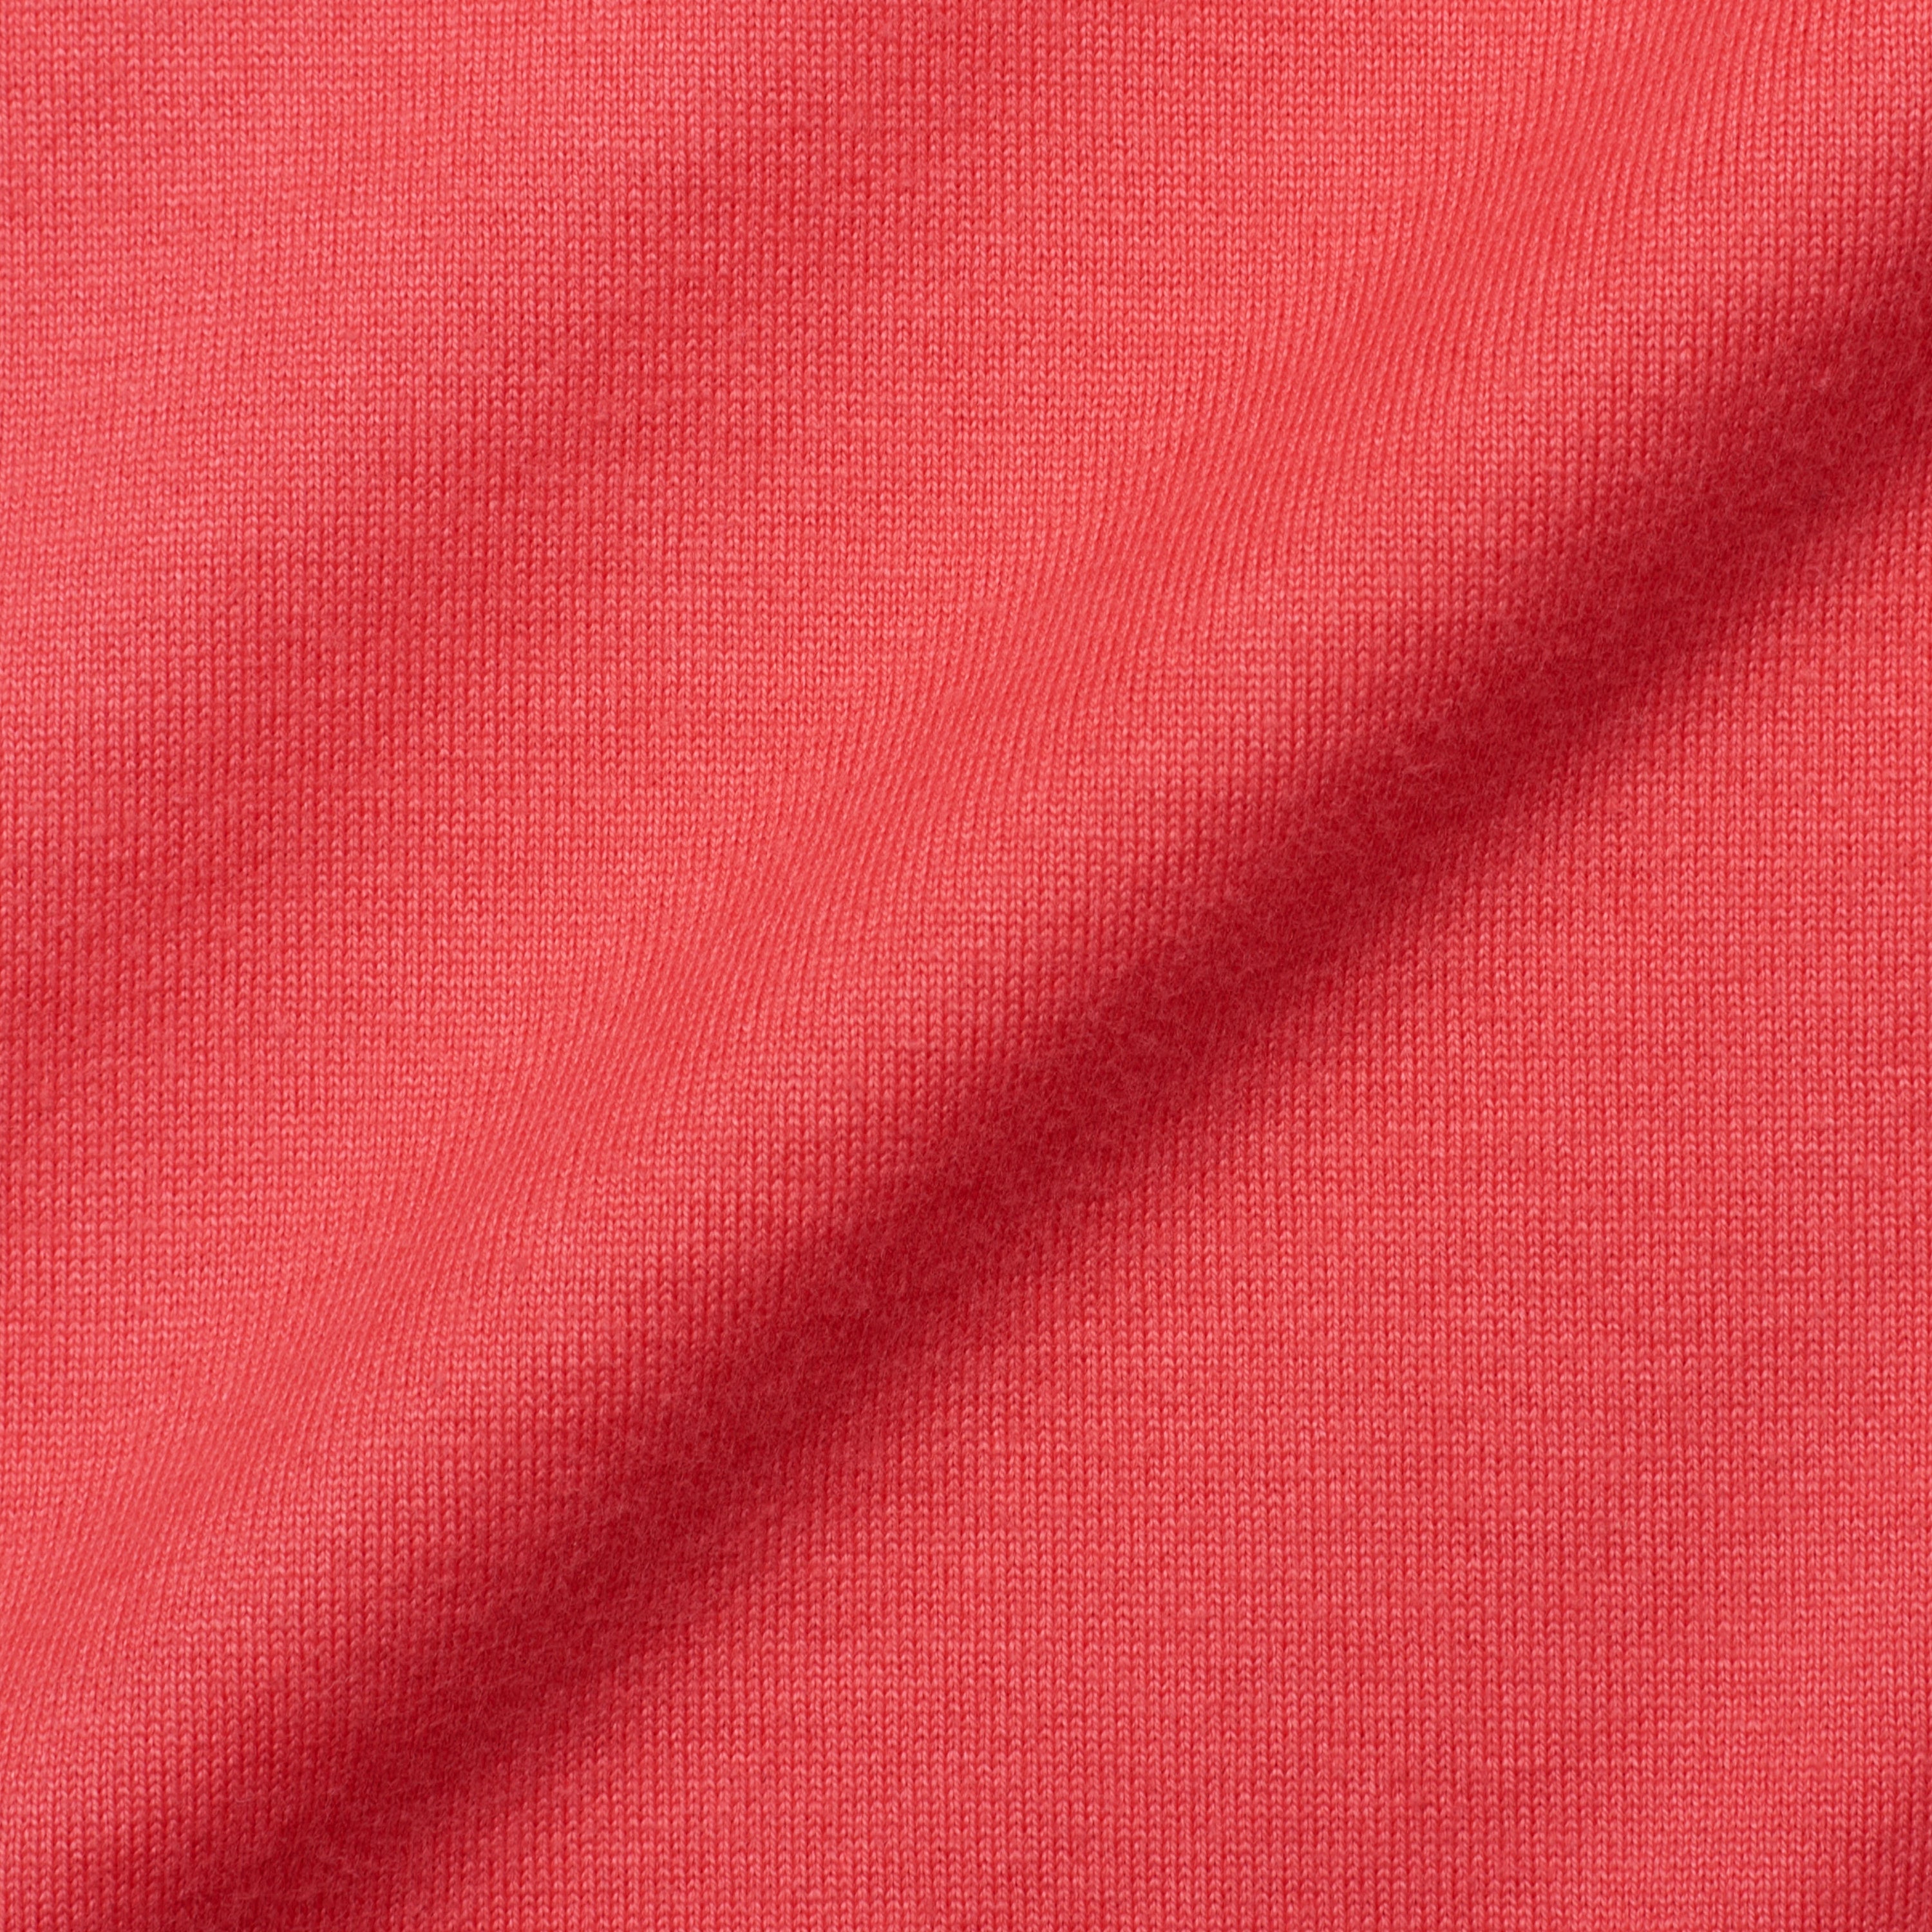 FEDELI "Zero" Punch Pink Organic Cotton Short Sleeve Jersey Polo Shirt 50 NEW M FEDELI